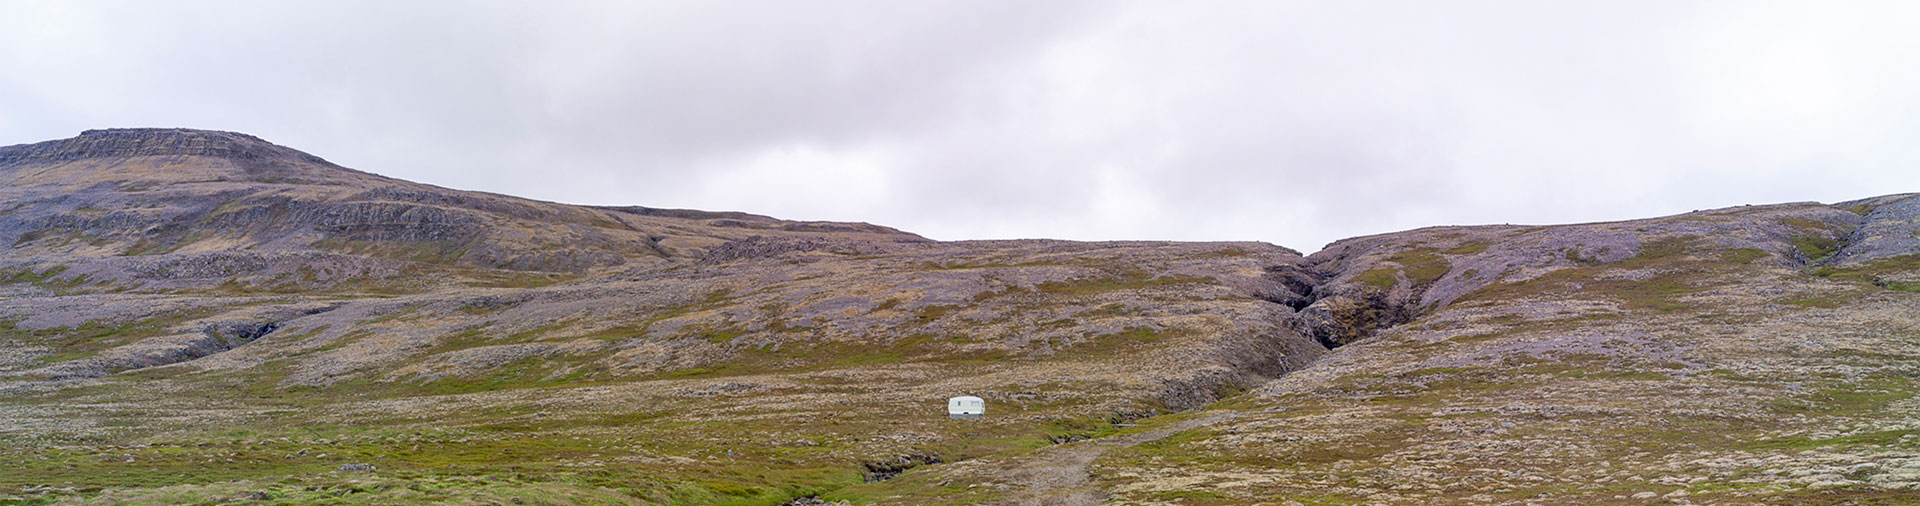 tiny-caravan-amidst-giant-mountain-landscape